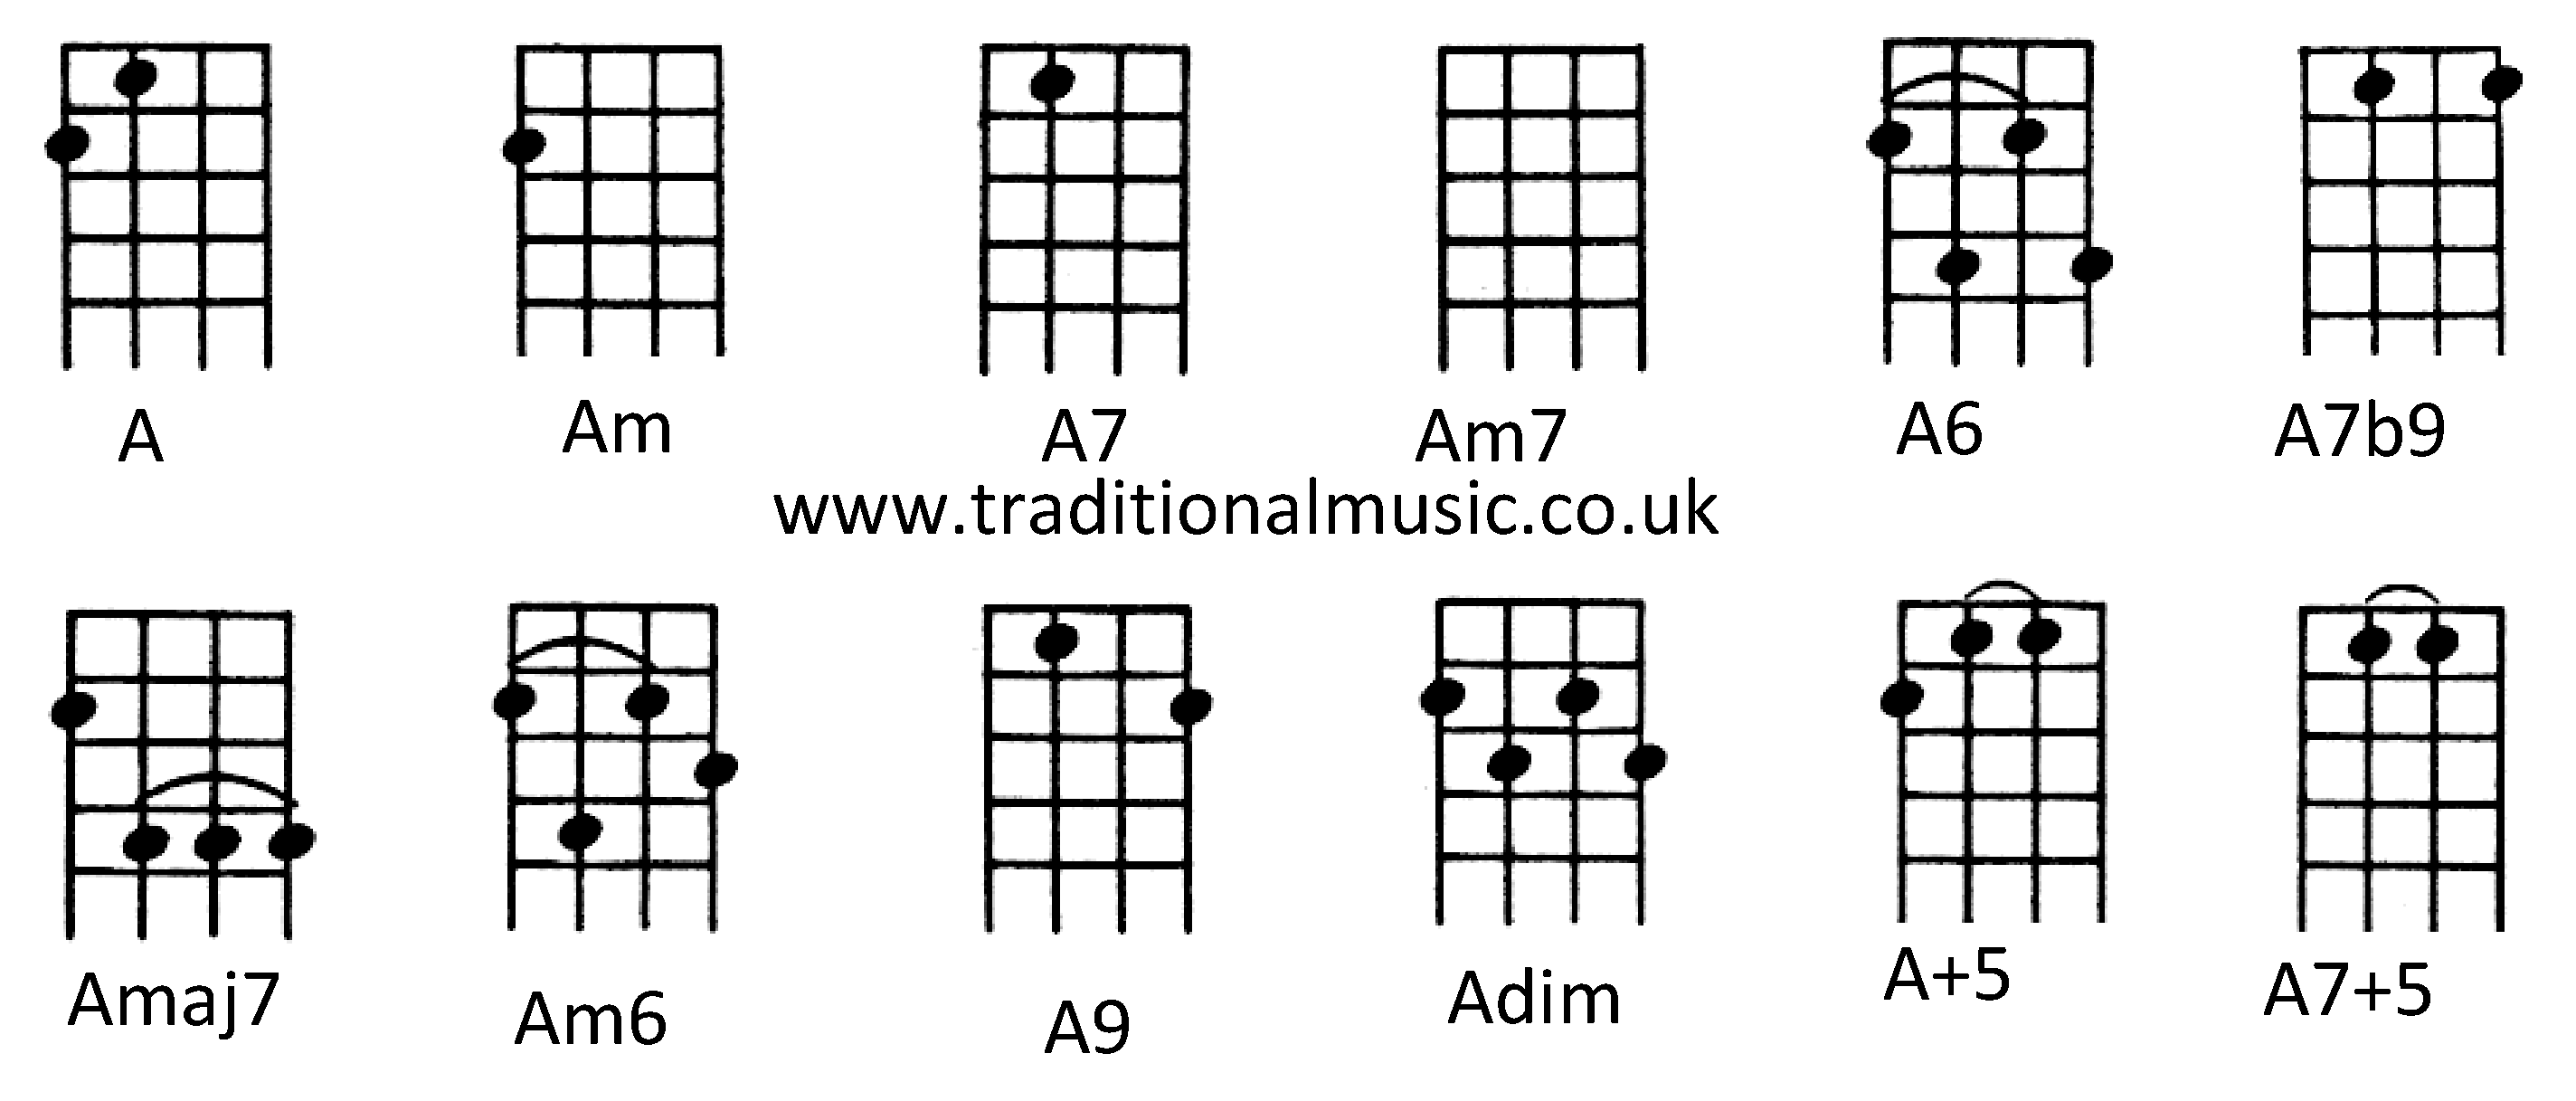 ukulele a6 - www.optuseducation.com.